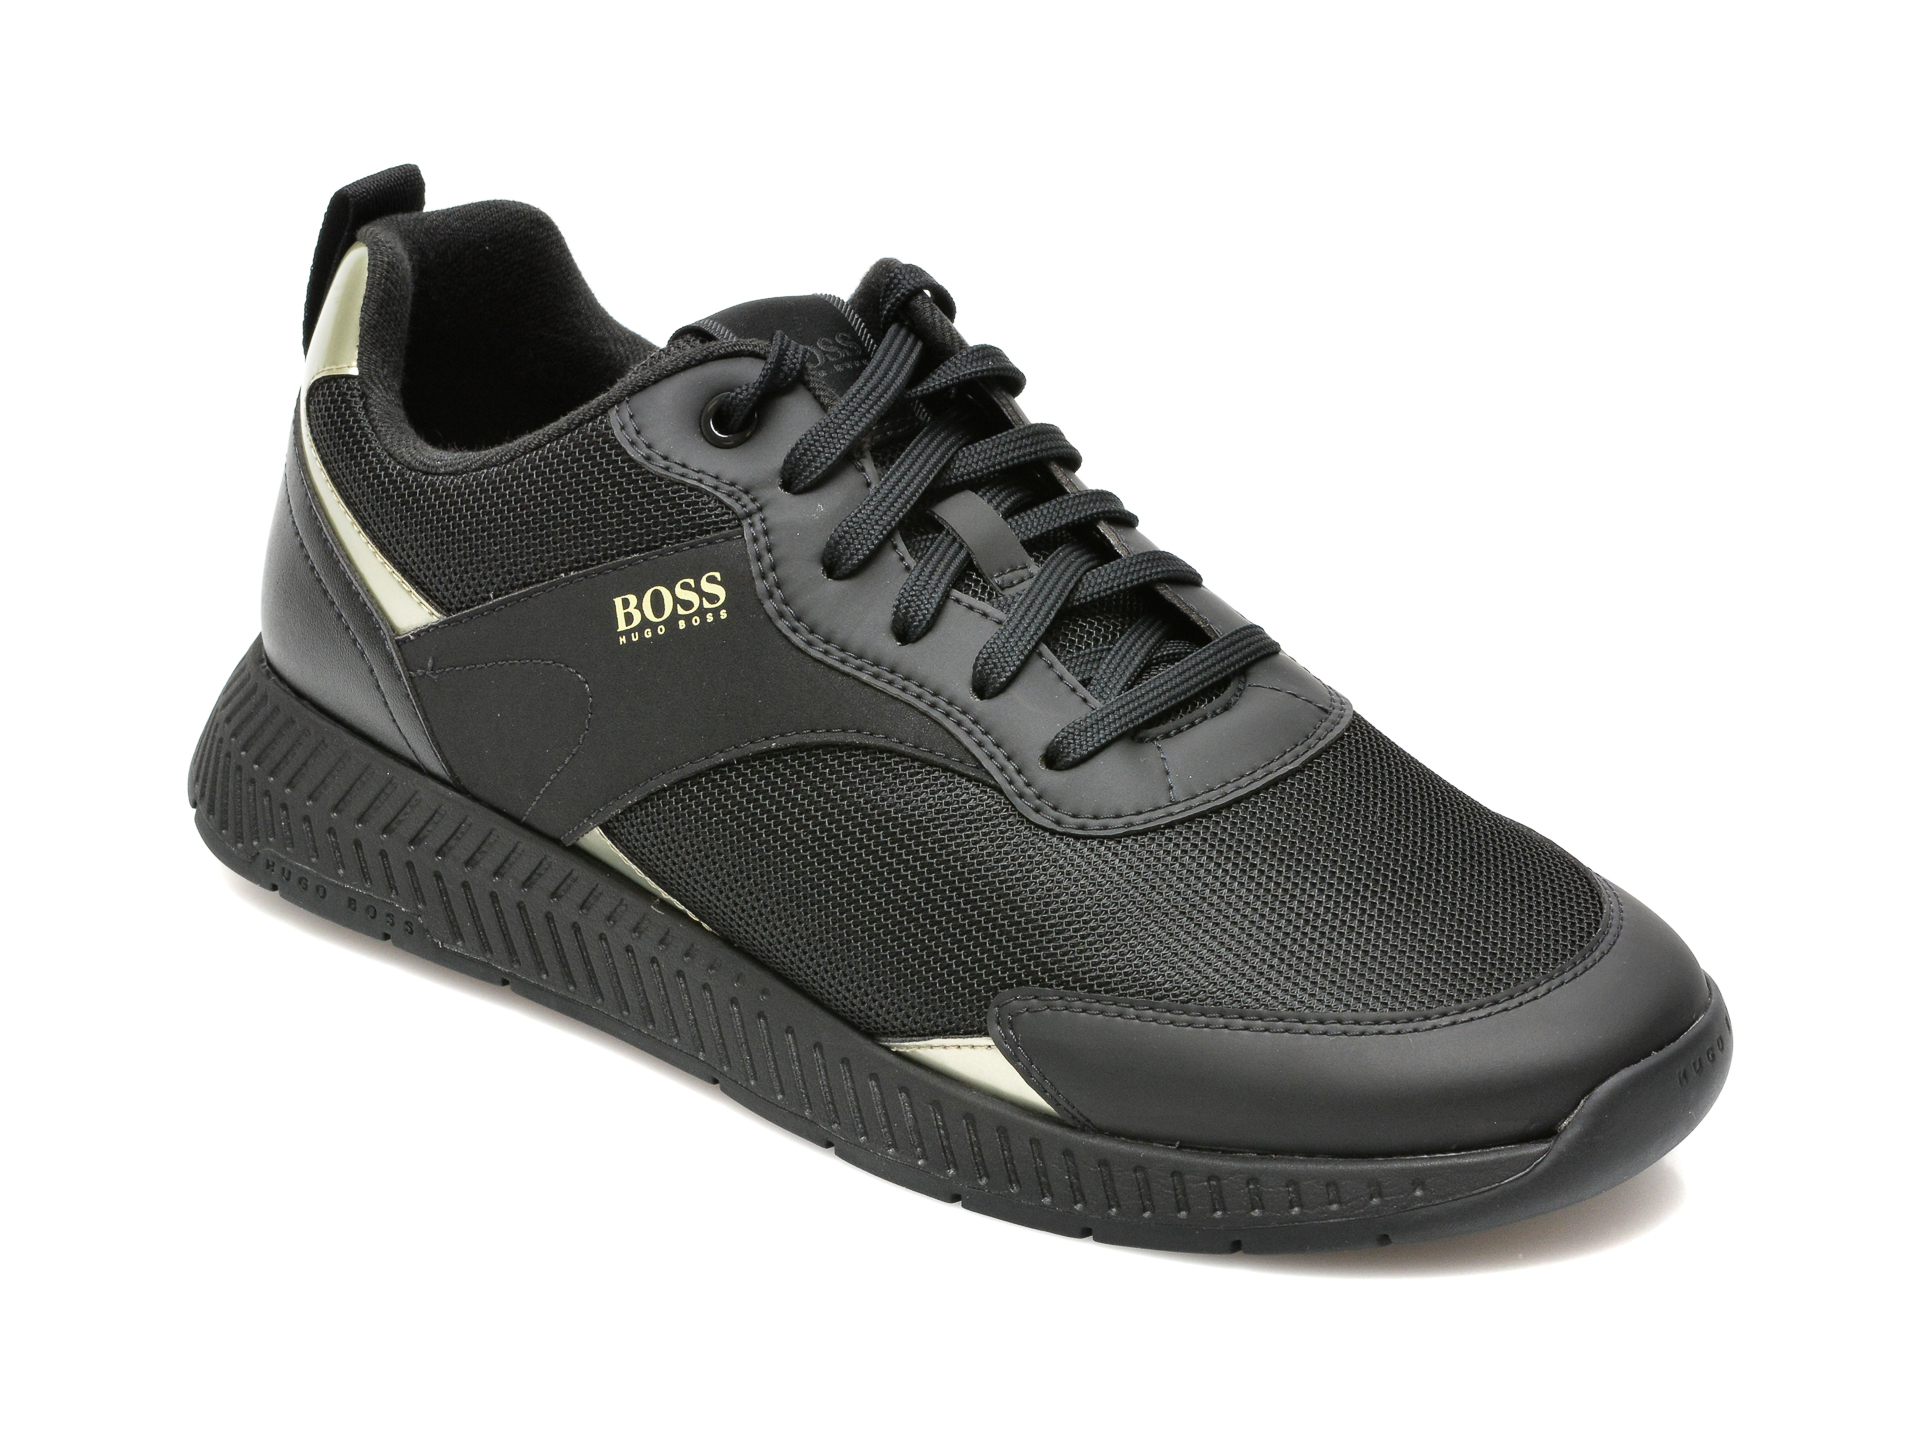 Pantofi sport HUGO BOSS negri, 9904, din material textil si piele ecologica Hugo Boss